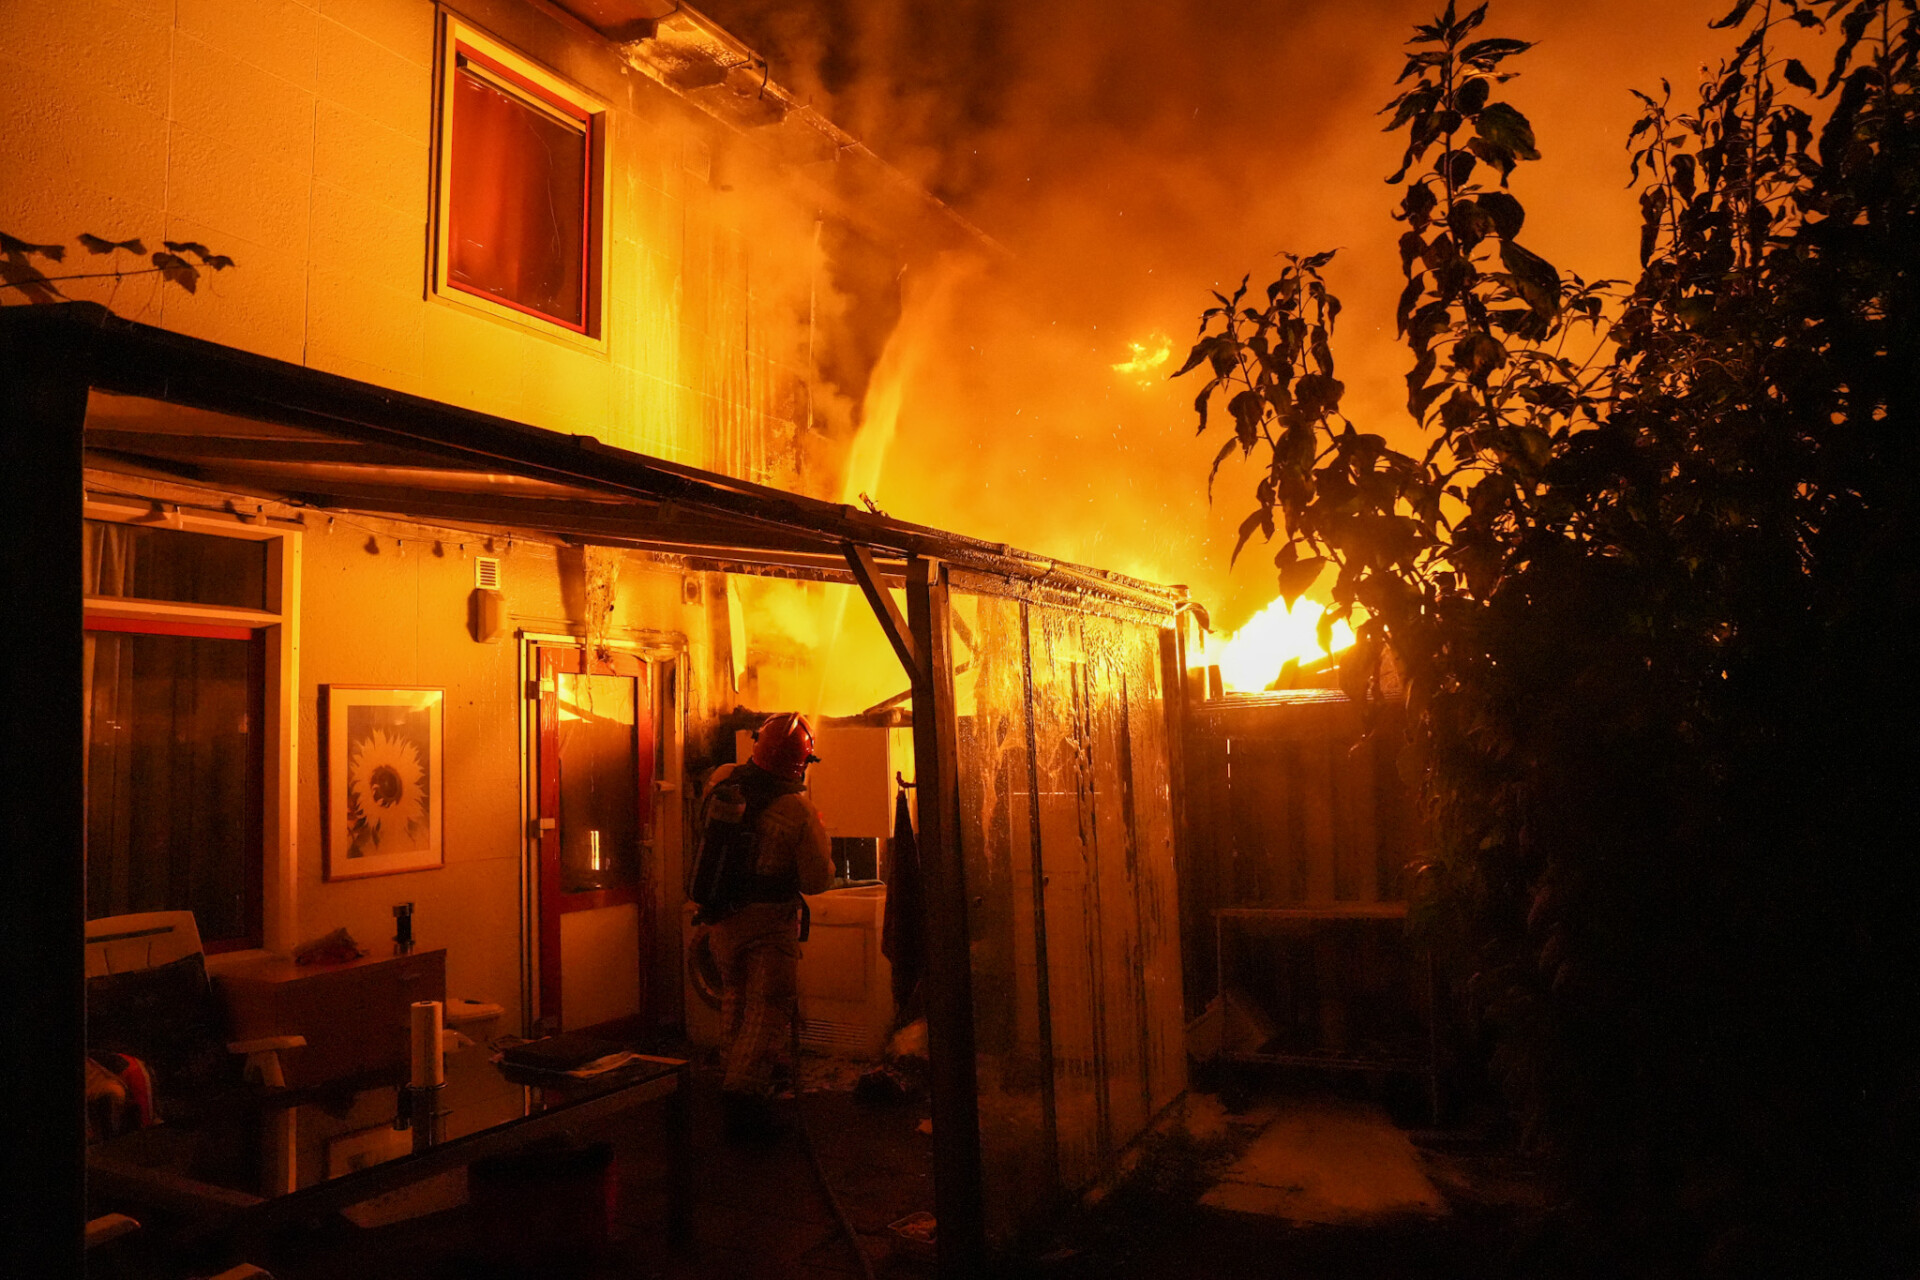 UPDATE: Brandweer vindt slachtoffer in woning bij uitslaande brand